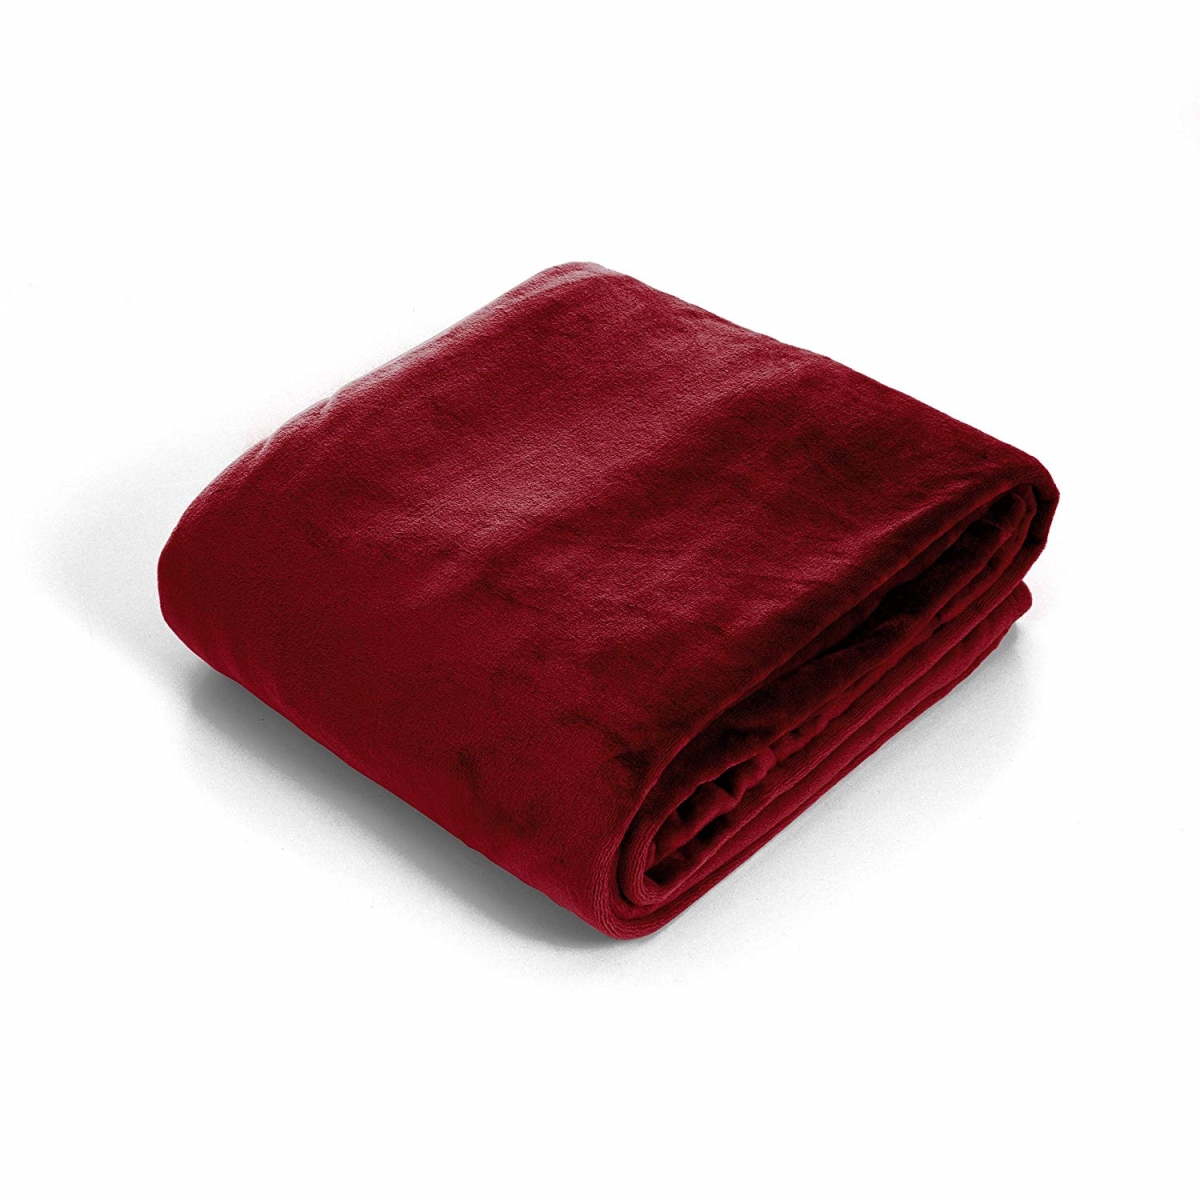 61a-06356 Super Soft Flannel Blanket, Twin Size - Burgundy